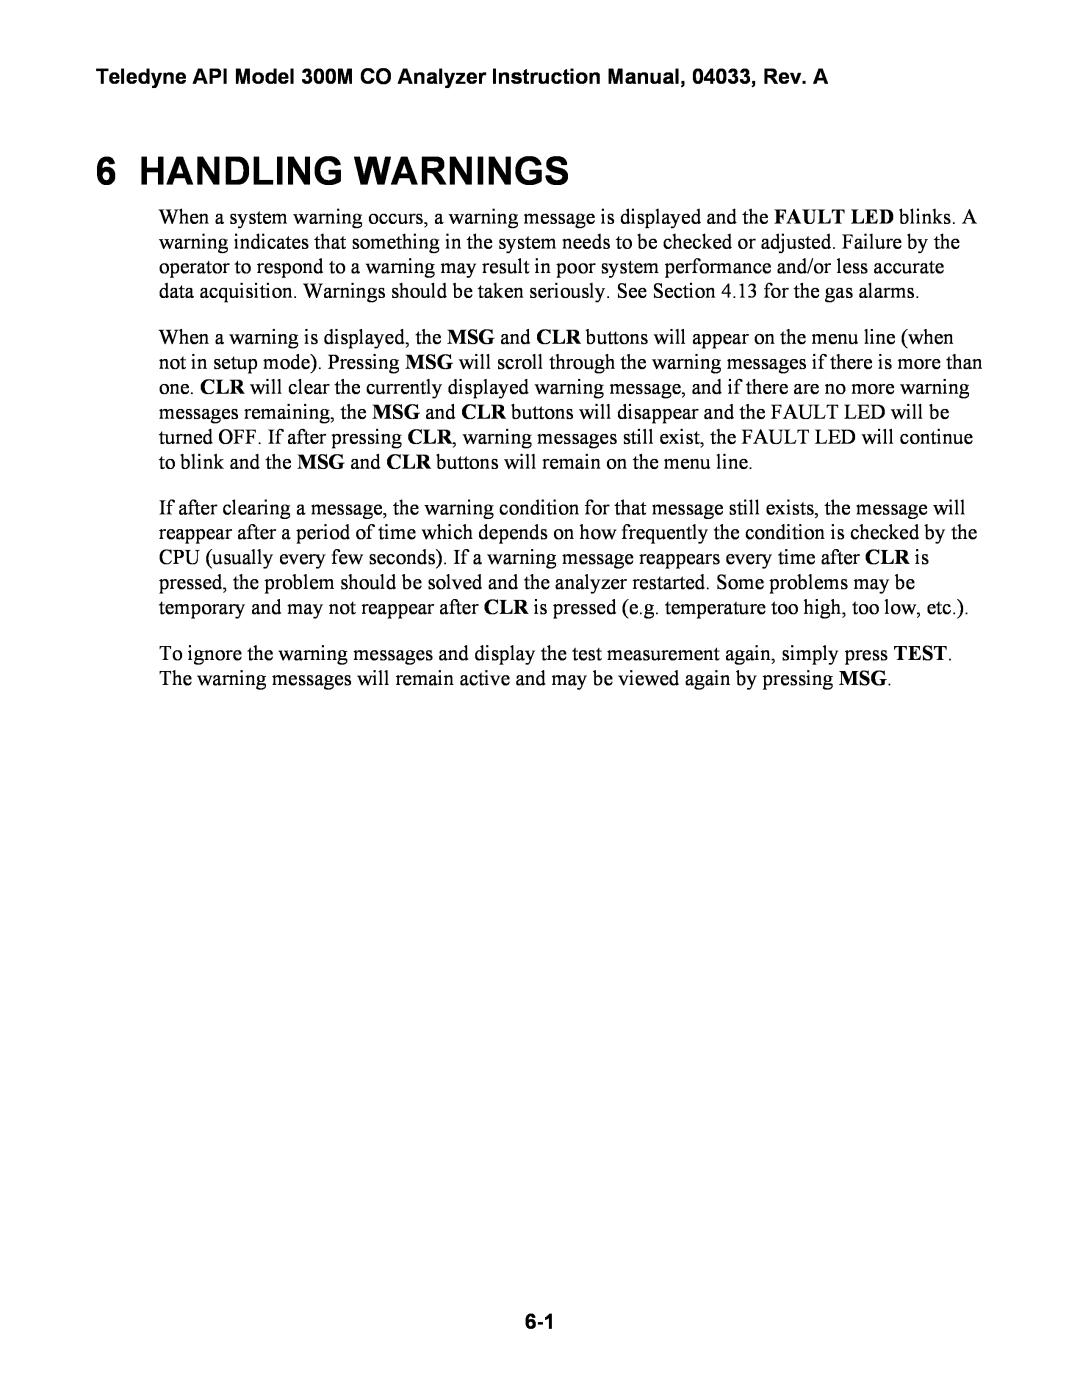 Teledyne 300M instruction manual Handling Warnings 